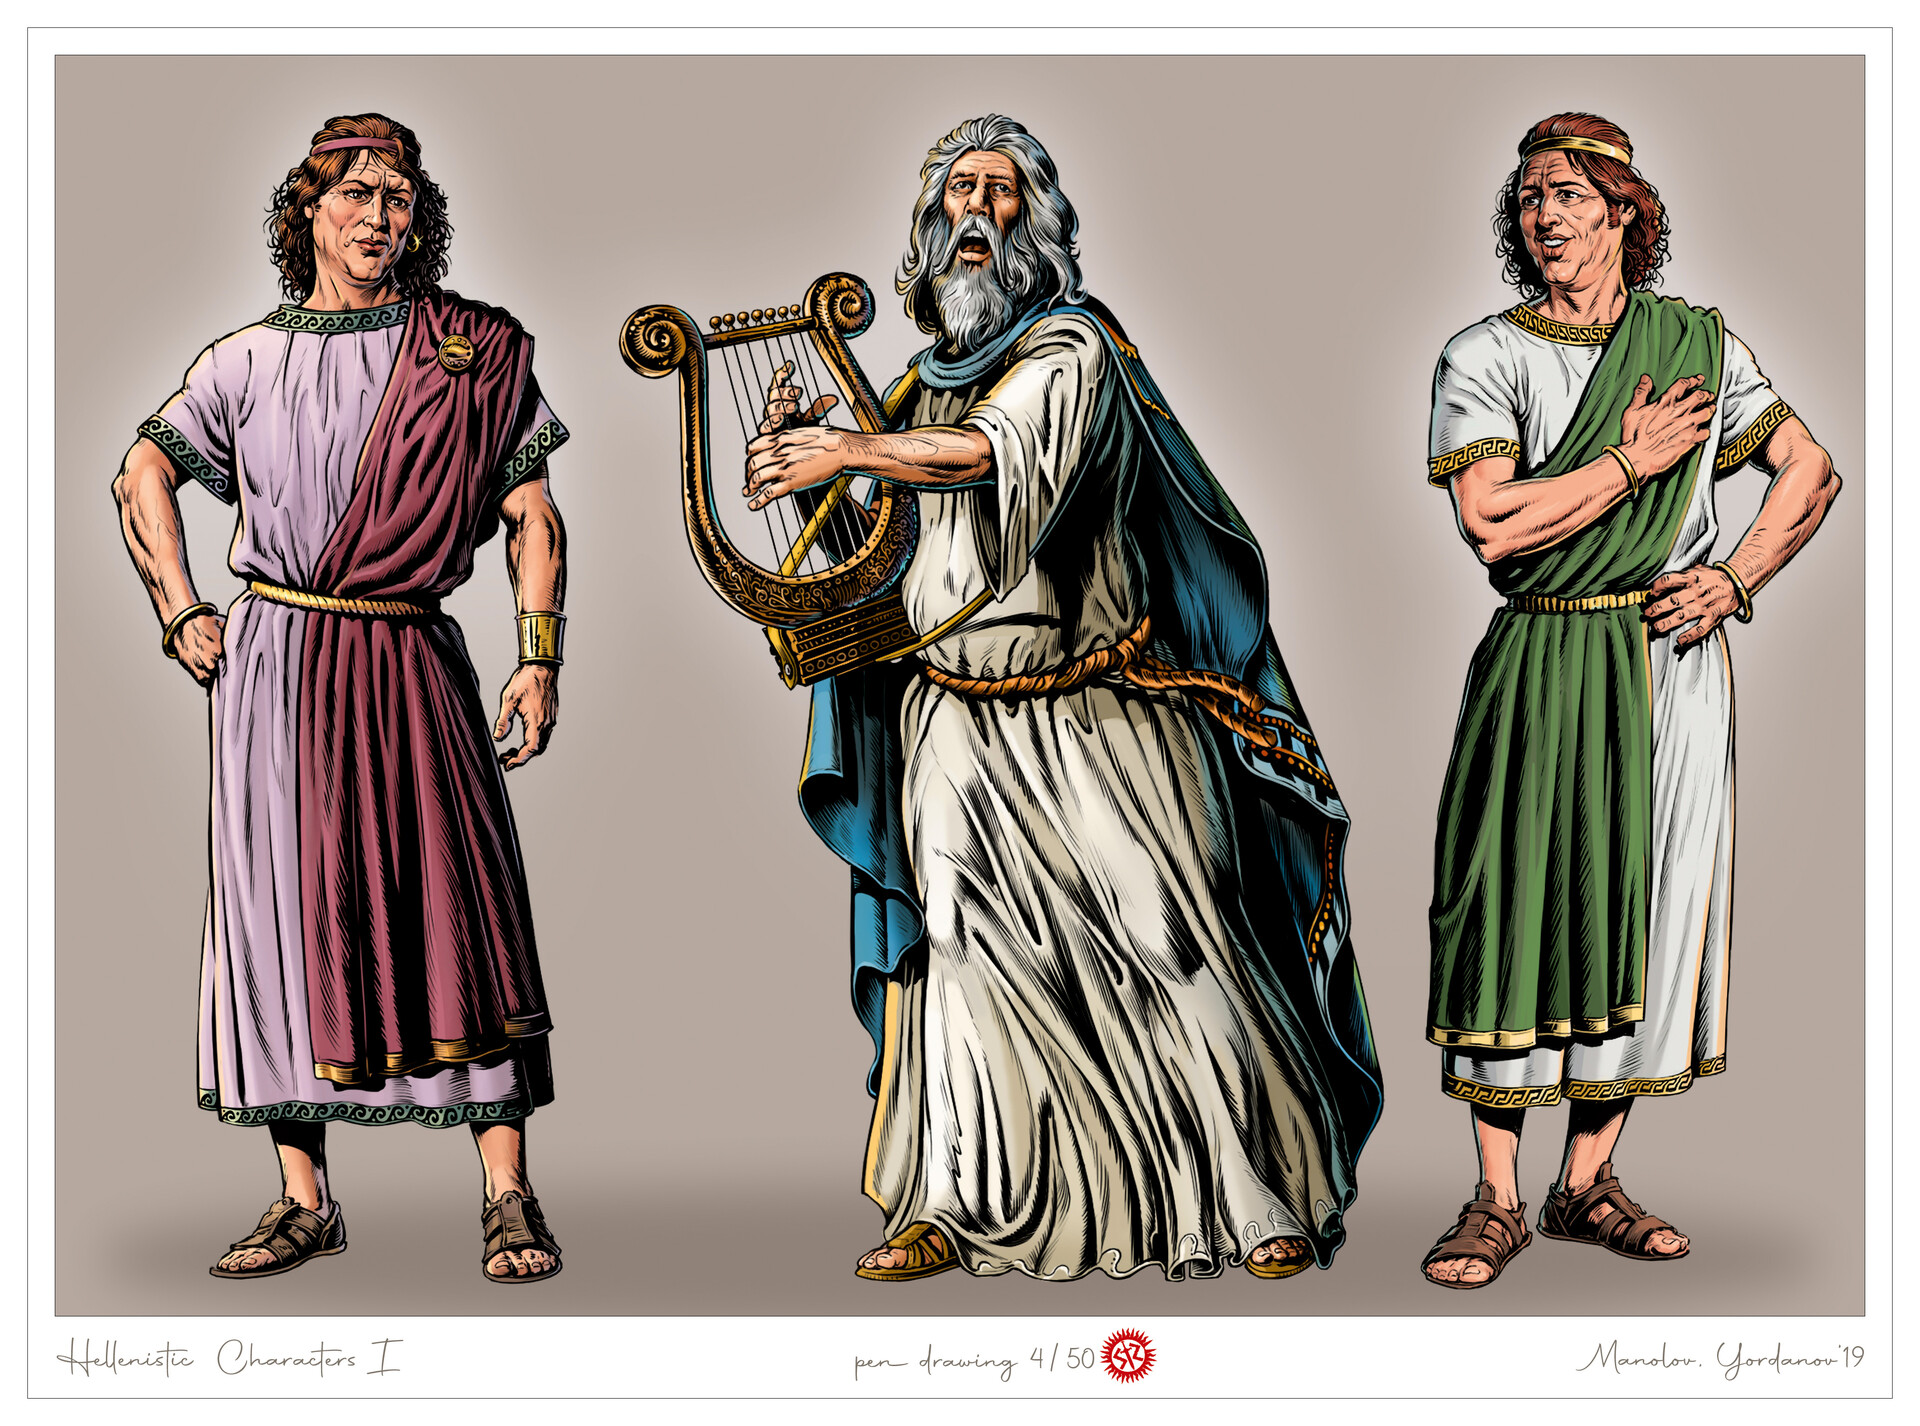 ArtStation - Hellenistic Characters I, with Yordanov